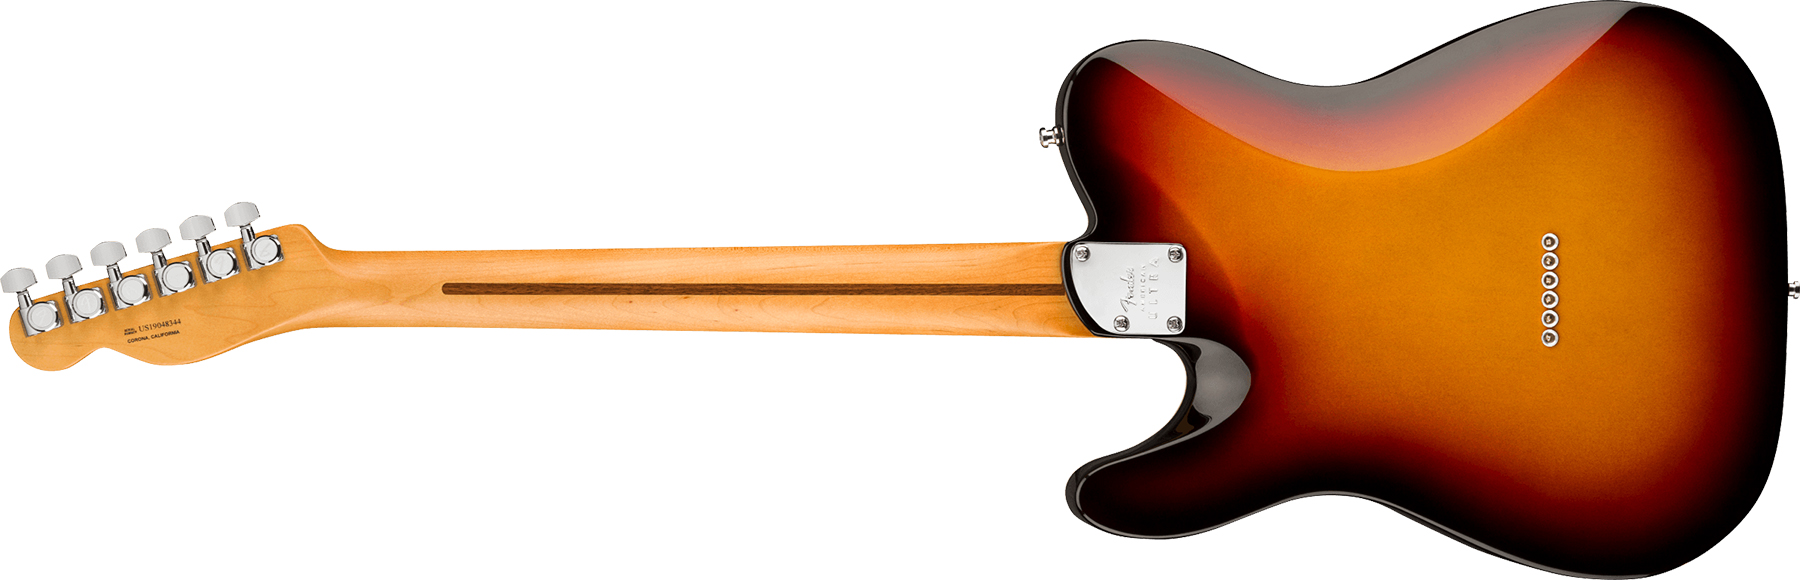 Fender Tele American Ultra 2019 Usa Mn - Ultraburst - Guitare Électrique Forme Tel - Variation 1